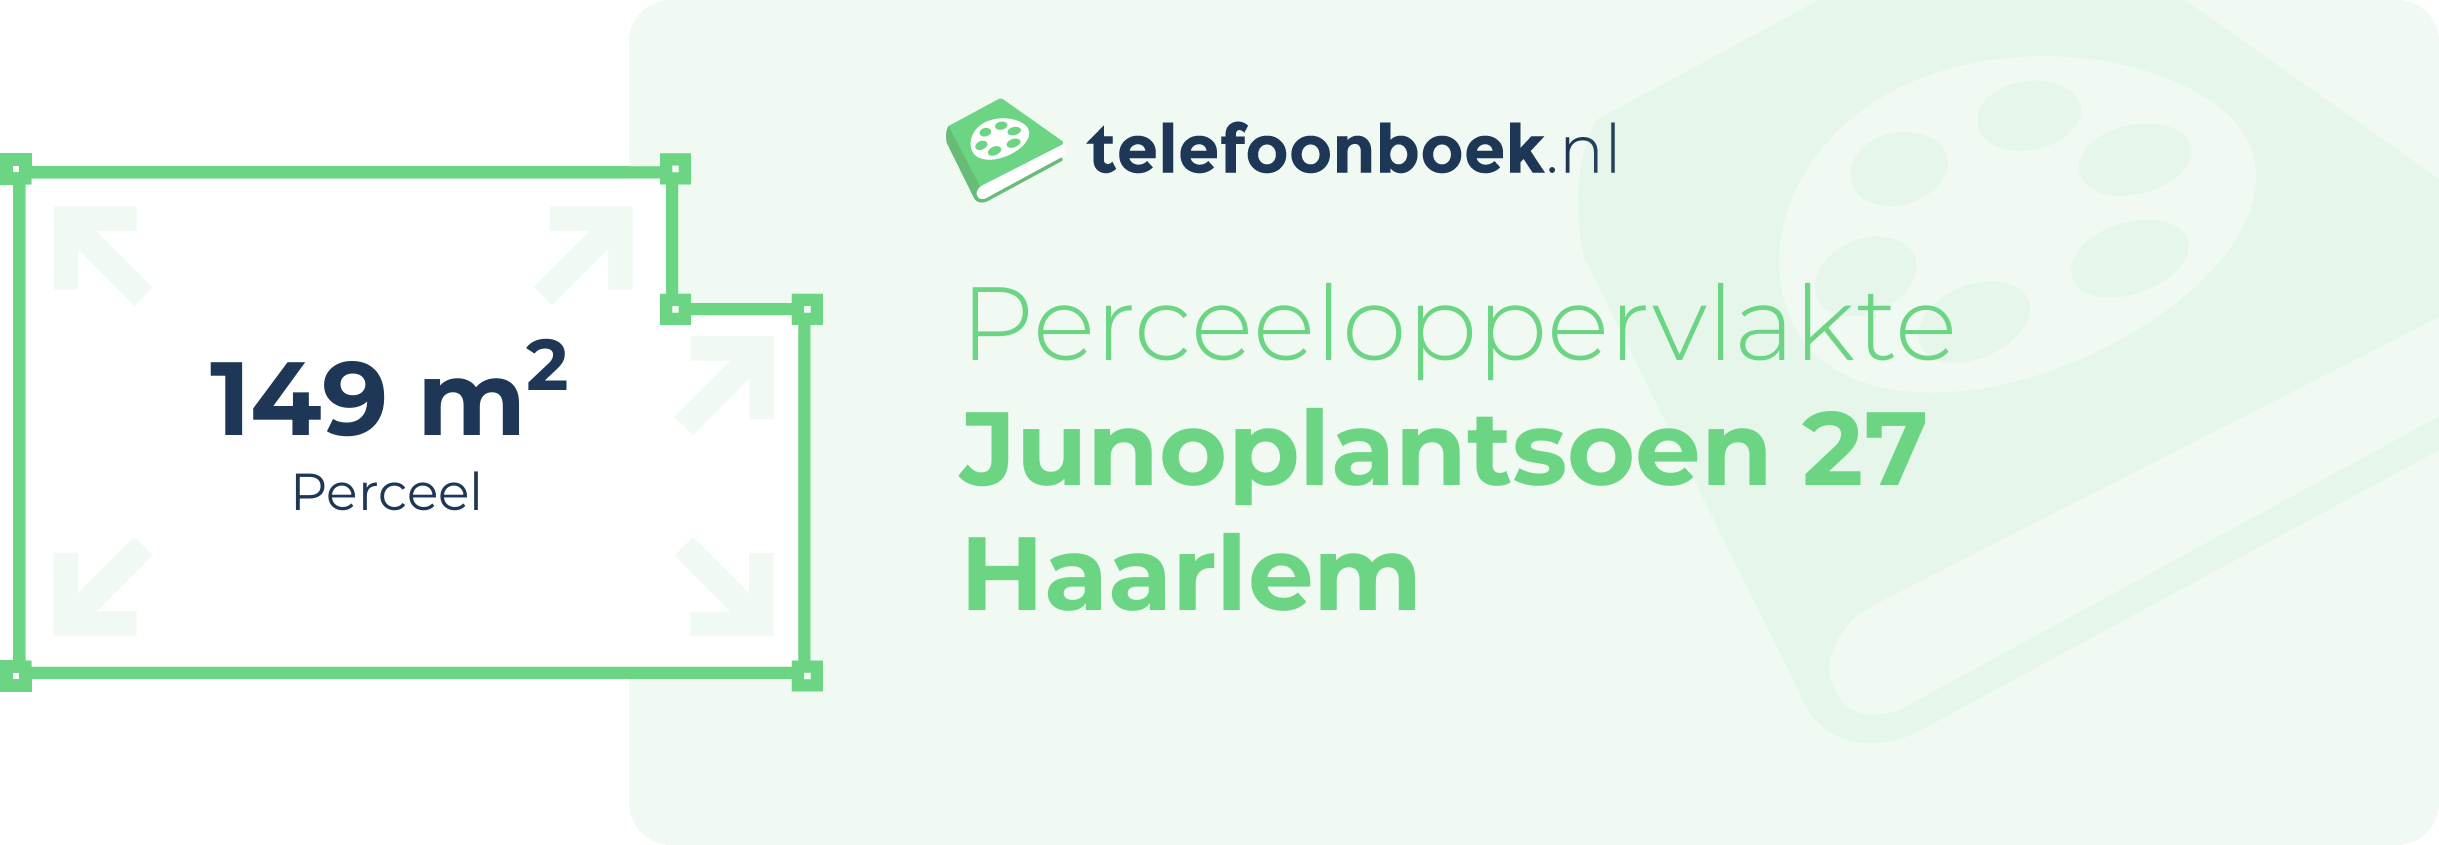 Perceeloppervlakte Junoplantsoen 27 Haarlem